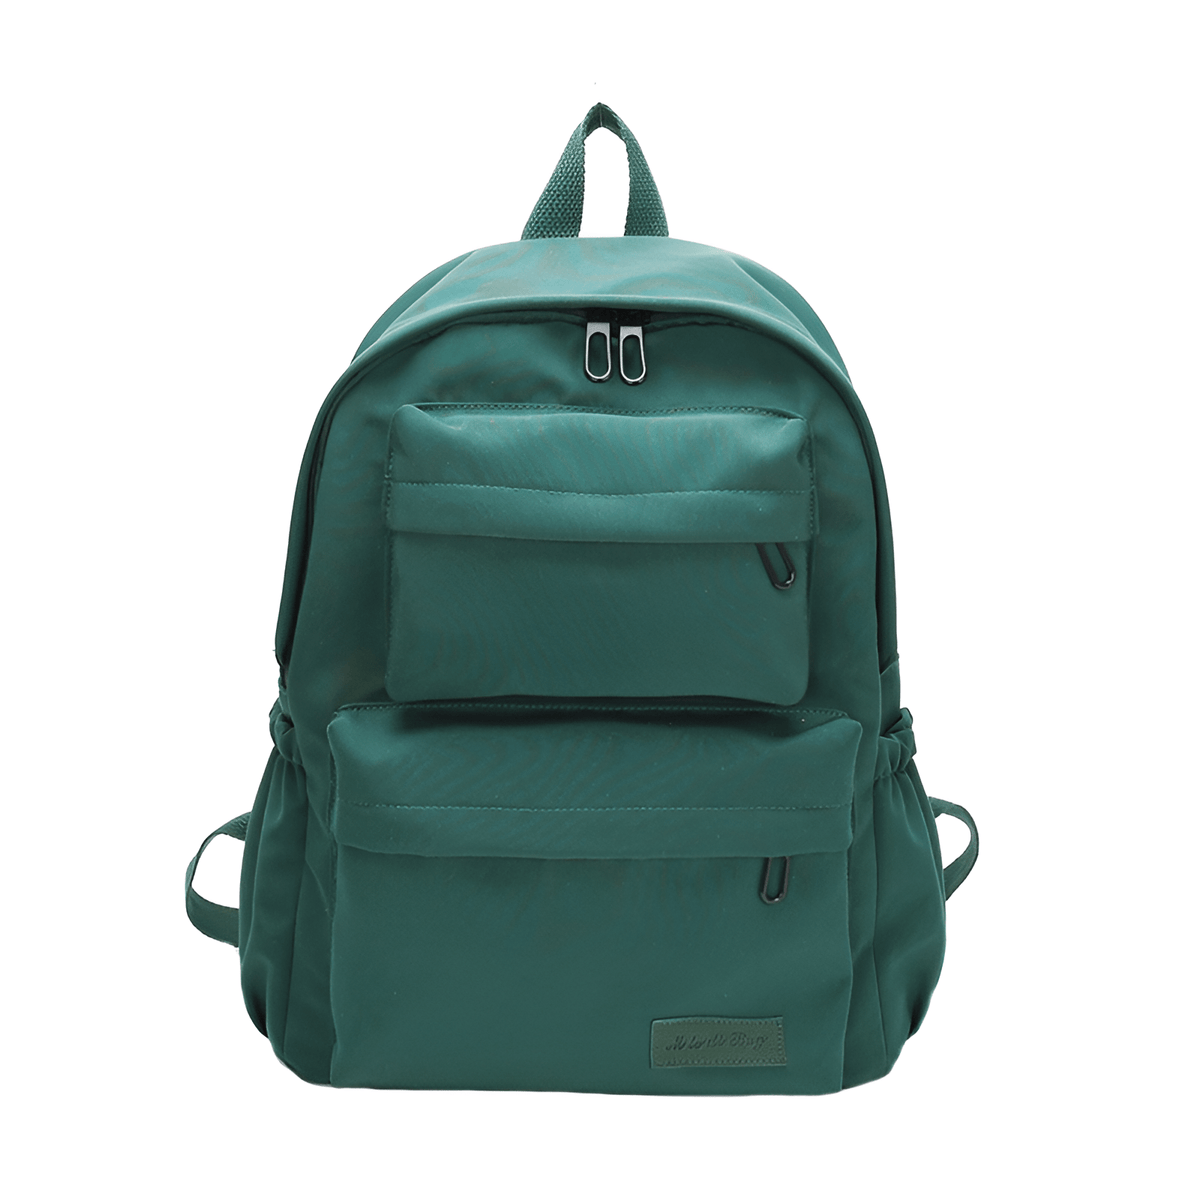 Waterproof Mochilas School Backpack — More than a backpack